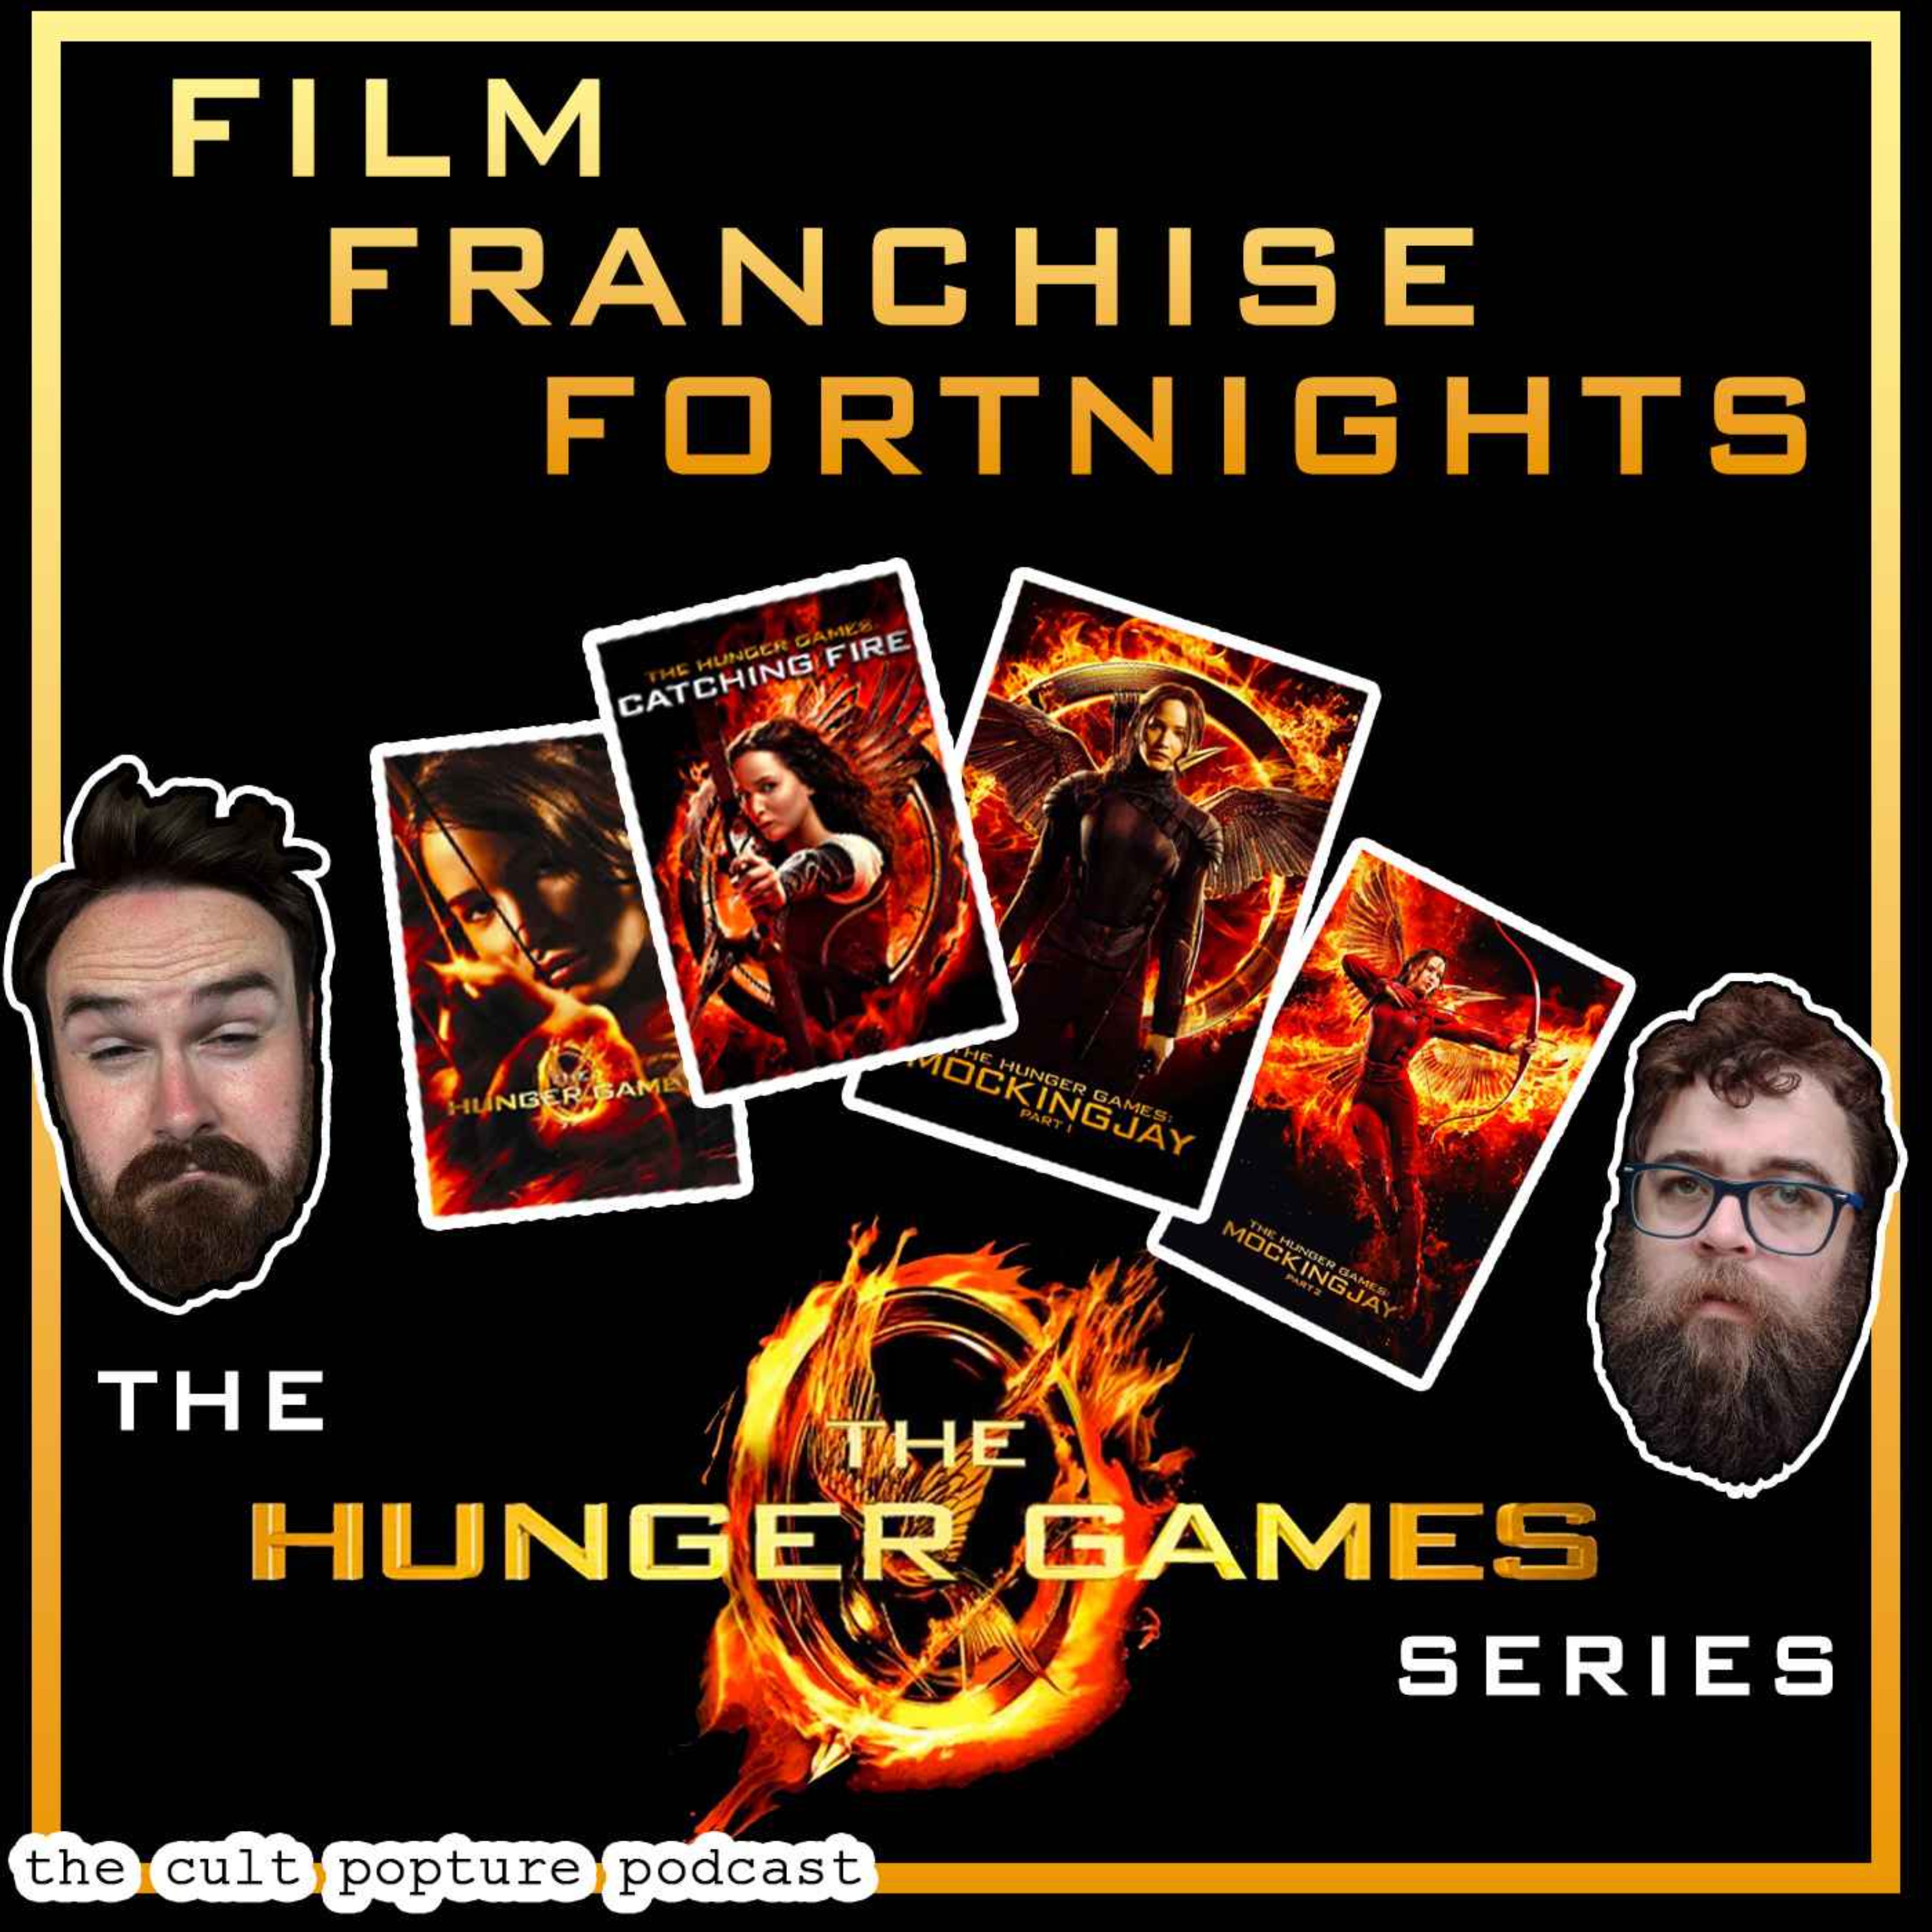 ”The Hunger Games” Series | Film Franchise Fortnights